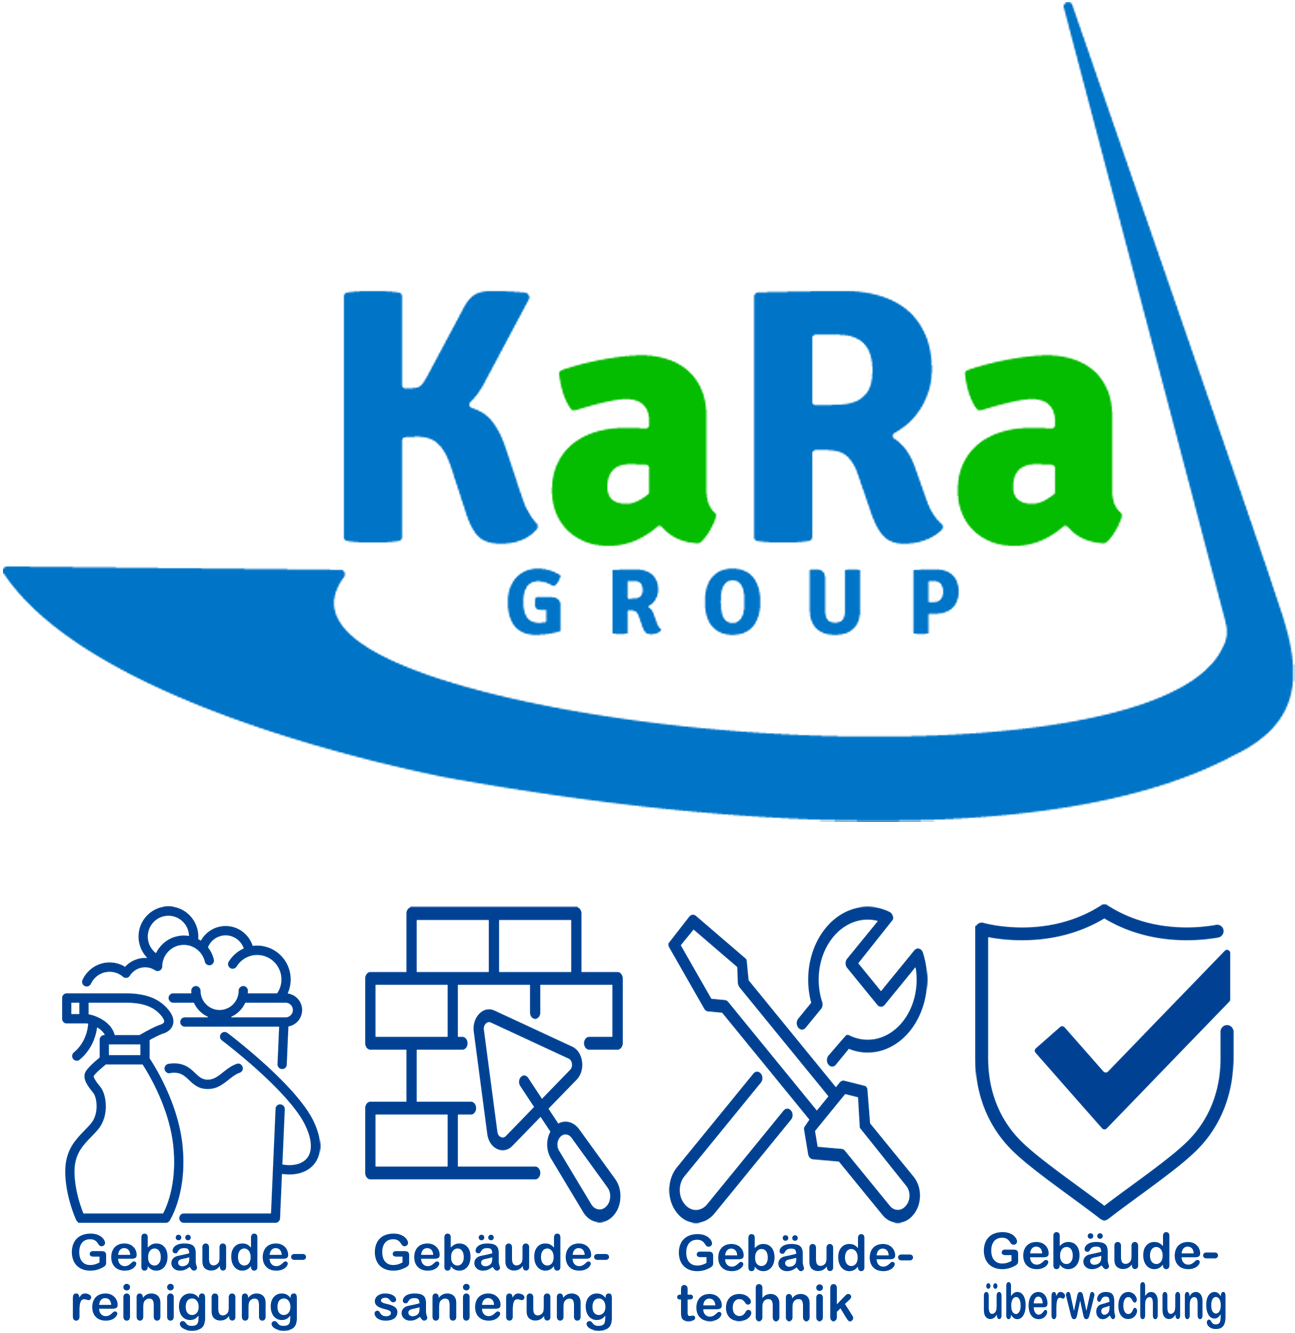 KaRa Group